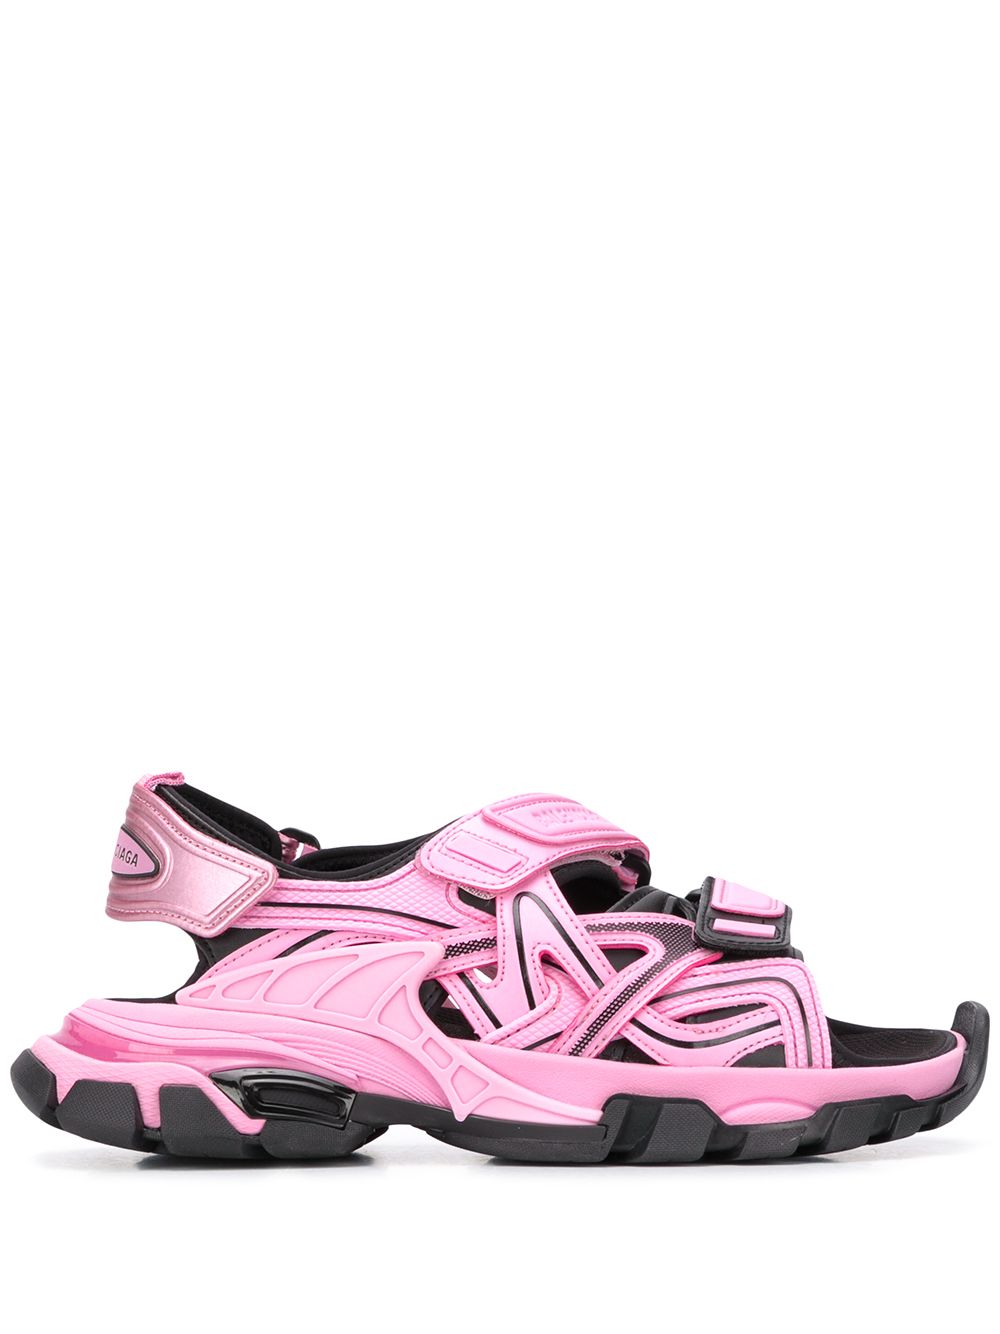 baby pink balenciaga shoes